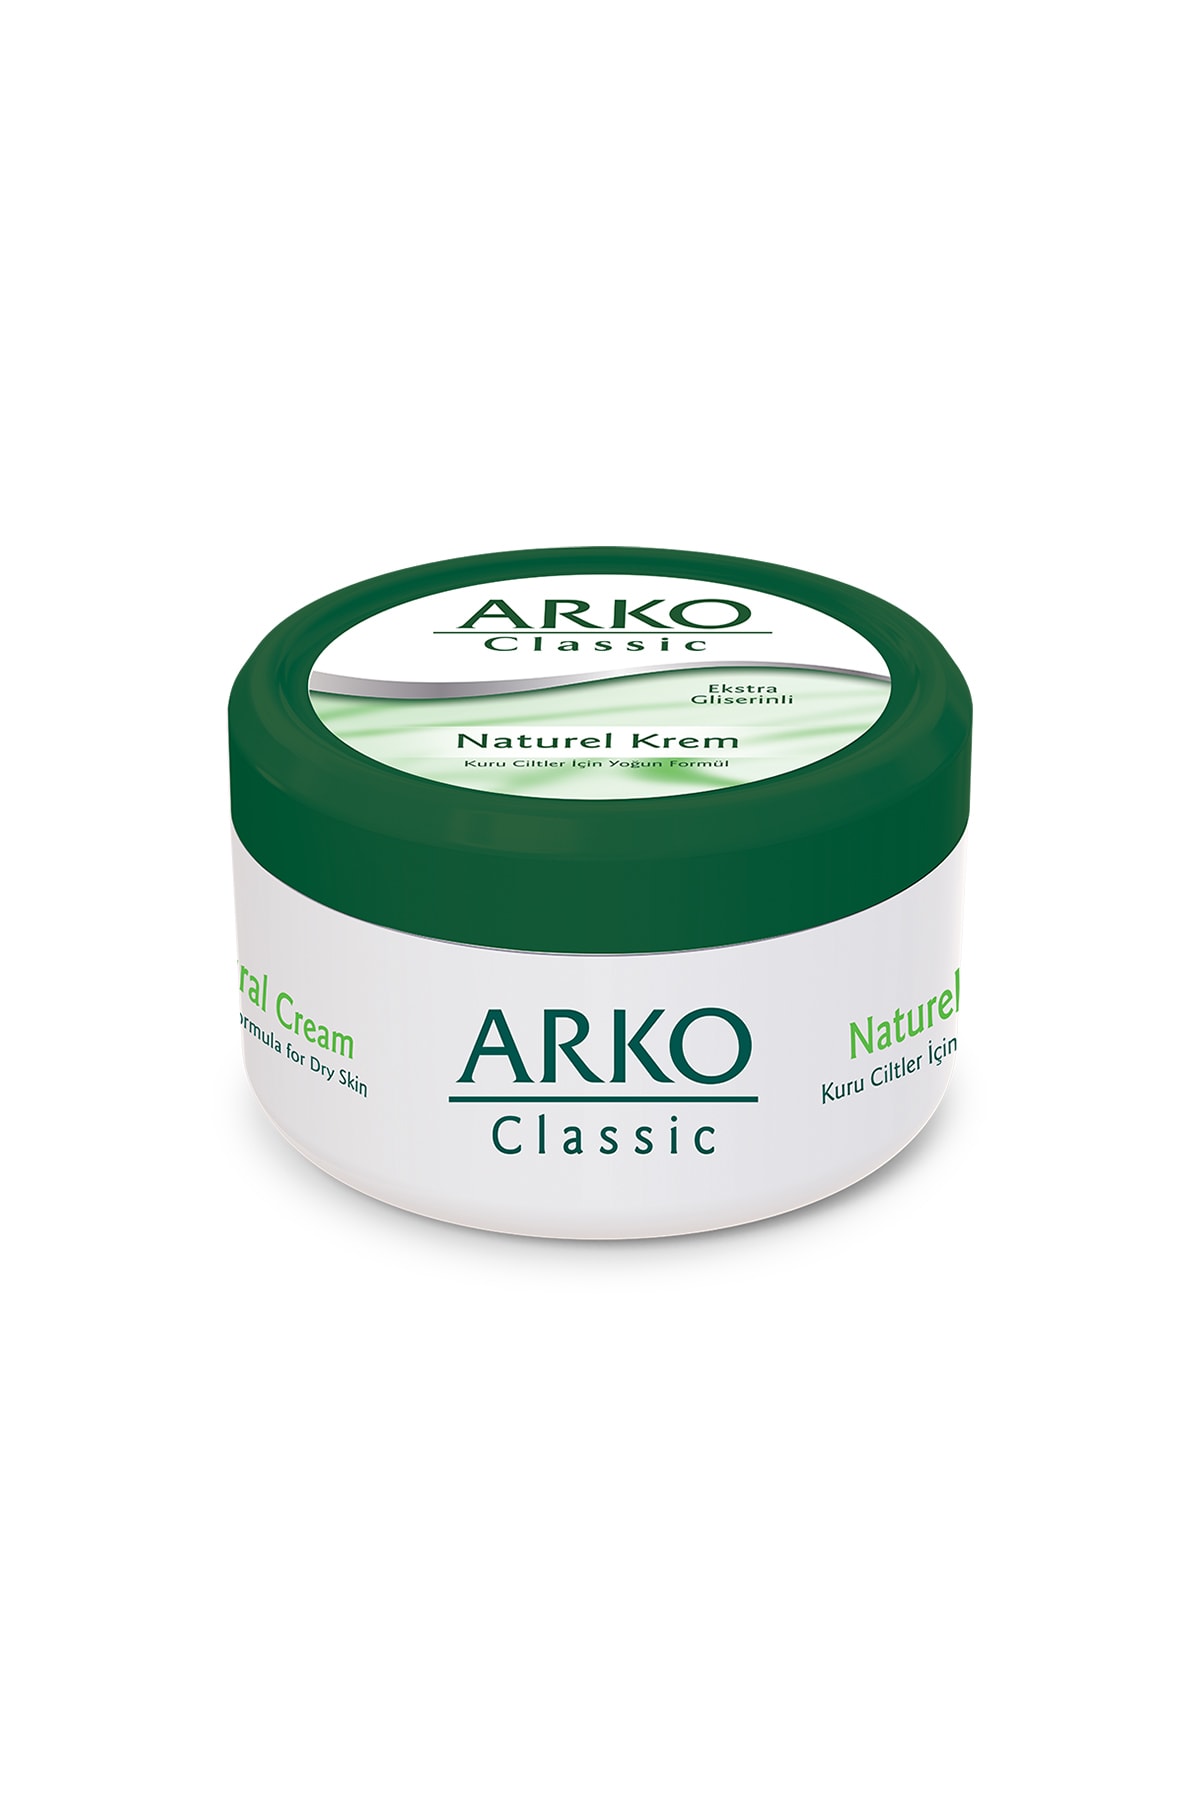 ARKO Klasik Natural Krem 100 ml